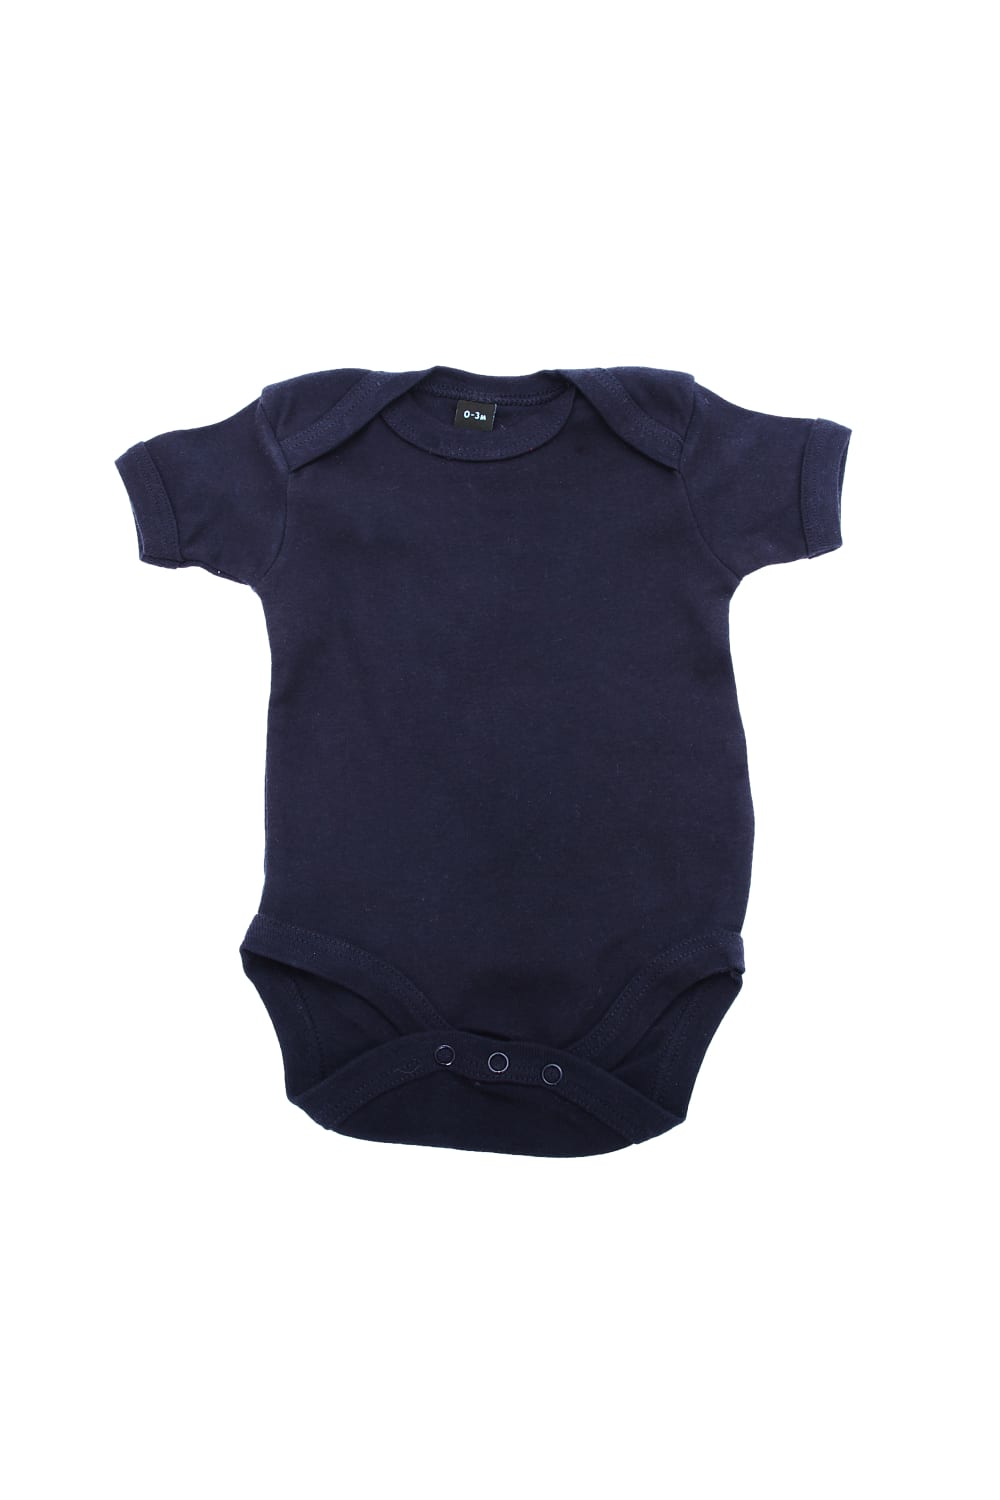 Babybugz Baby Onesie / Baby And Toddlerwear (Nautical Navy)